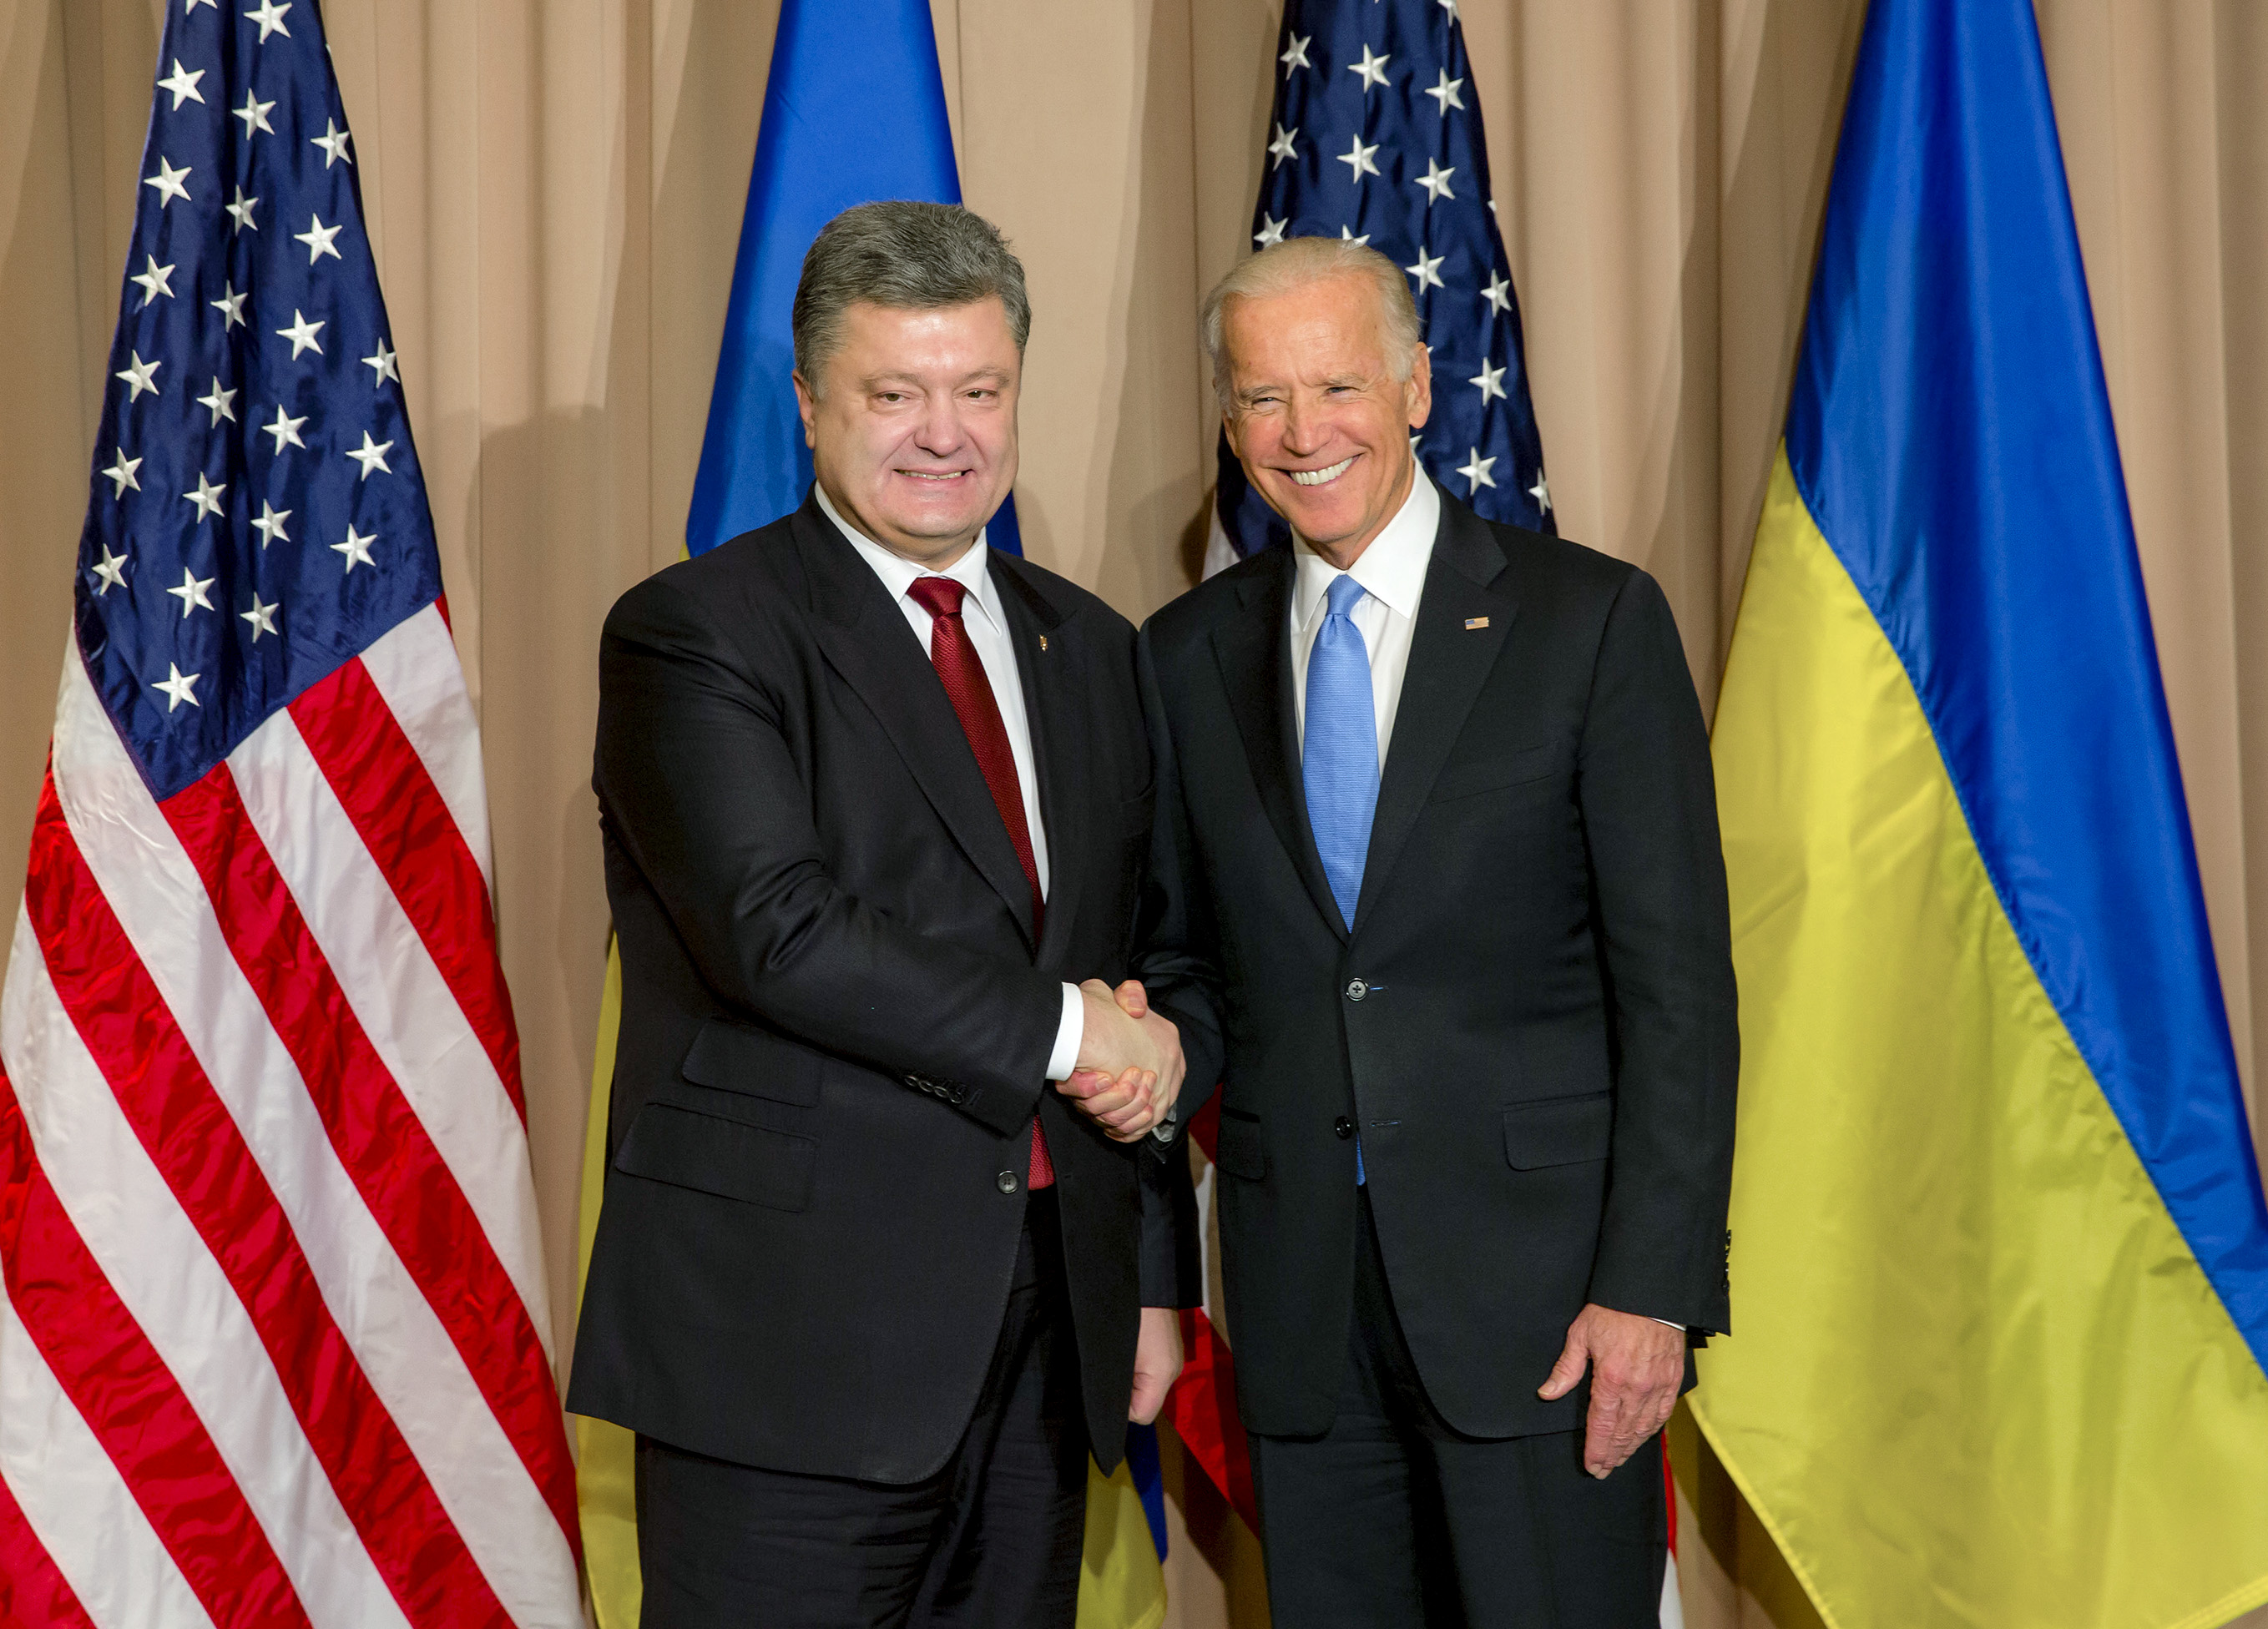 Петро Порошенко і Джозеф Байден. Фото: president.gov.ua